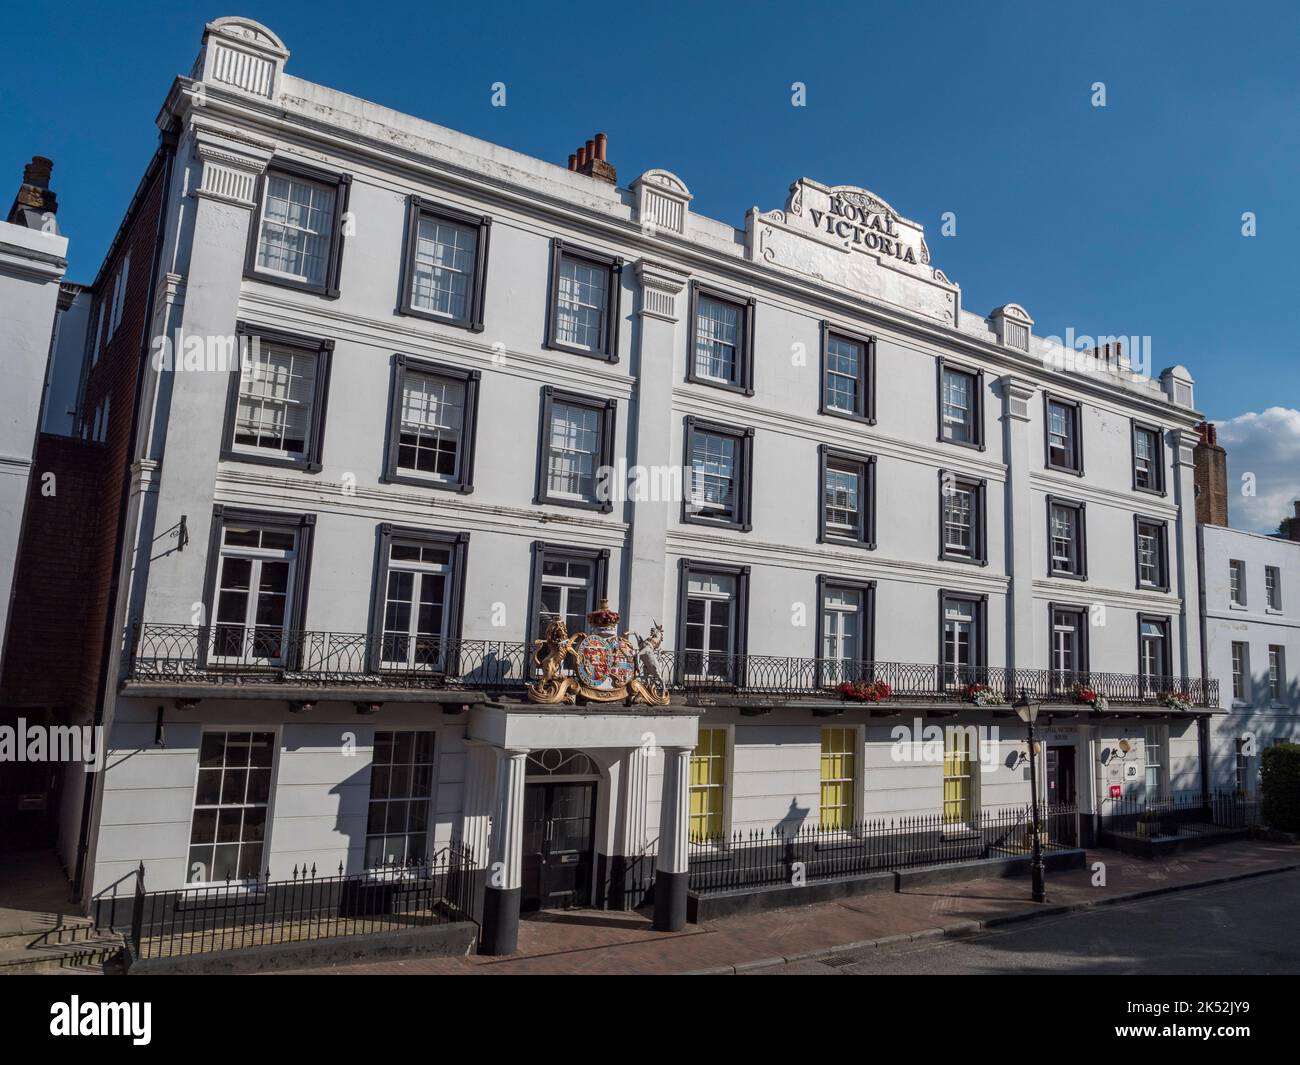 The Royal Victoria Hotel in the Pantiles area of Royal Tunbridge Wells, Kent, UK. Stock Photo